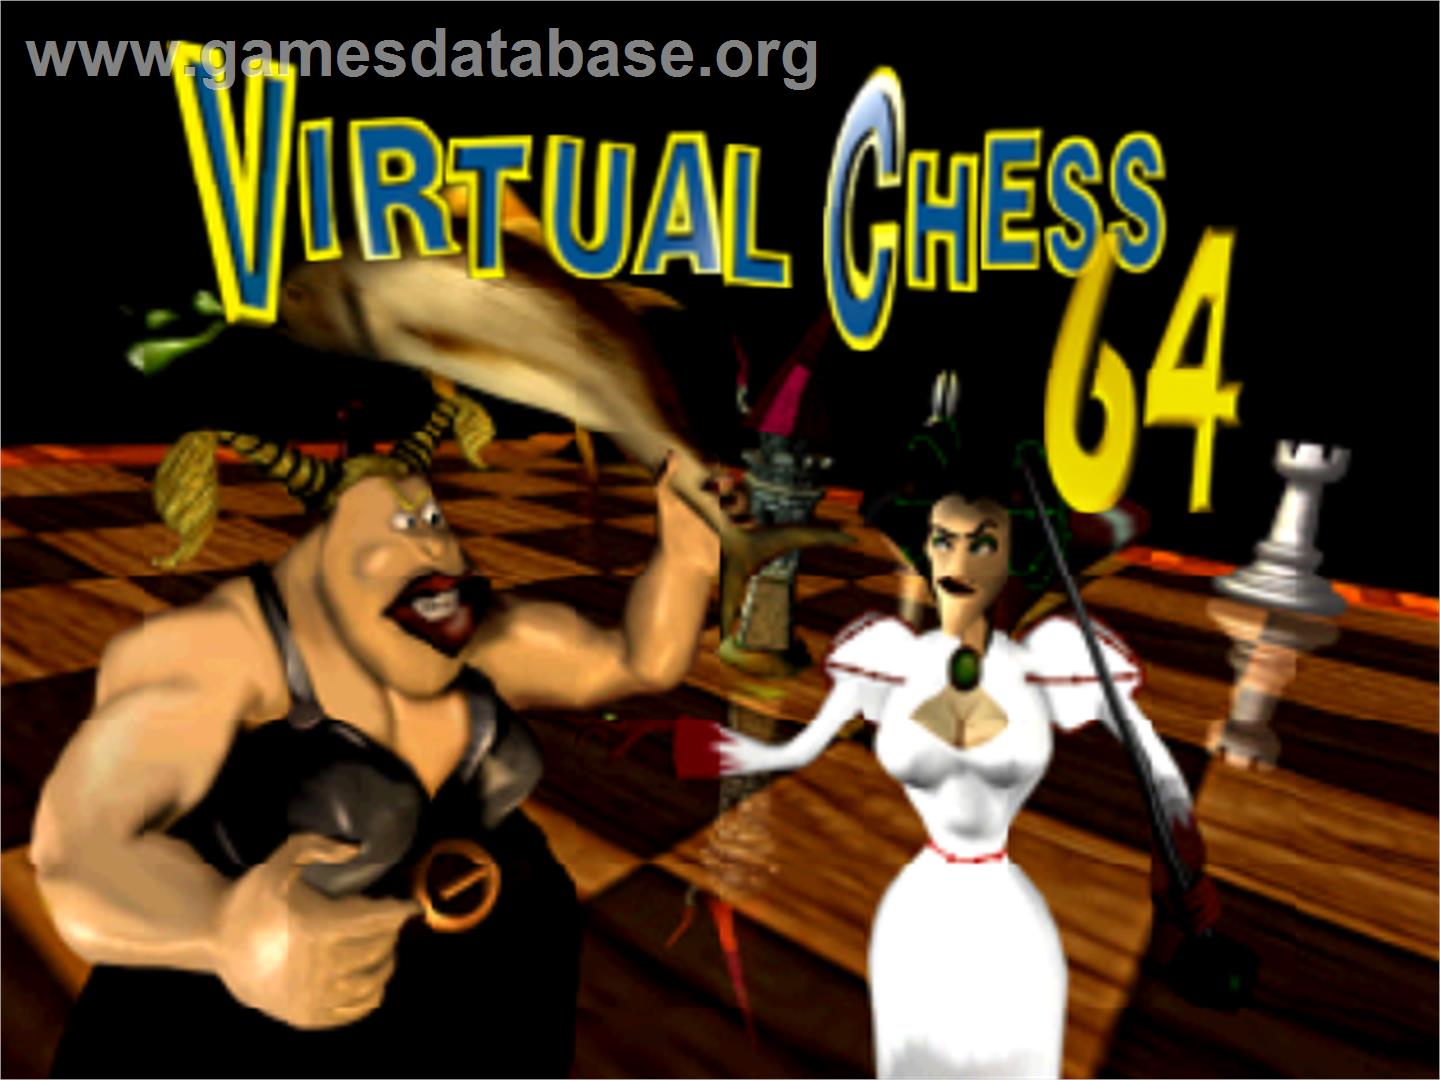 Virtual Chess 64 - Nintendo N64 - Artwork - Title Screen